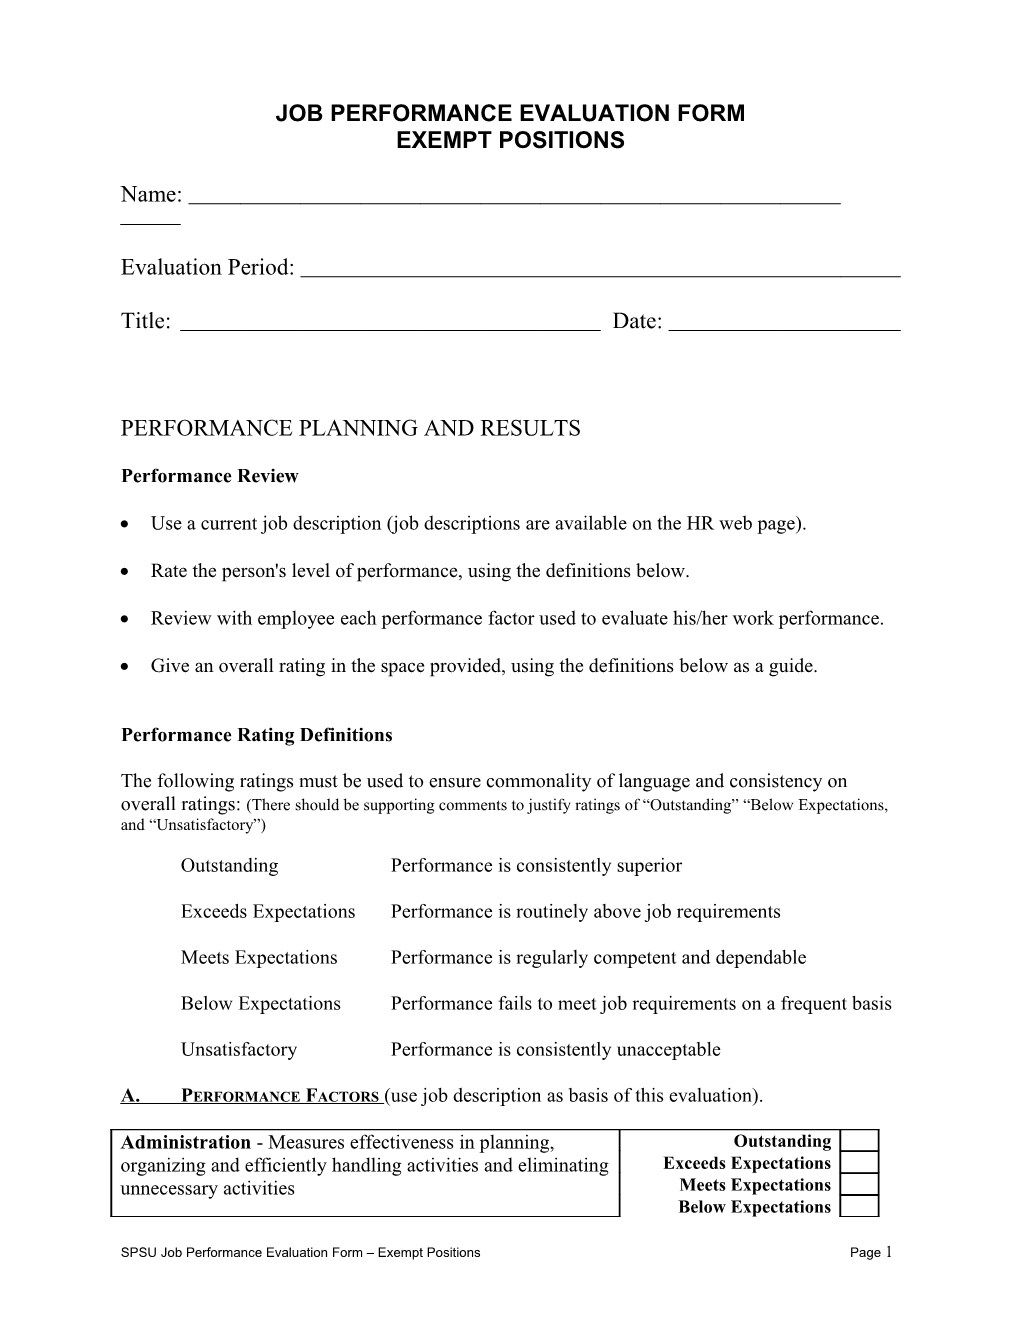 Job Performance Evaluation Form